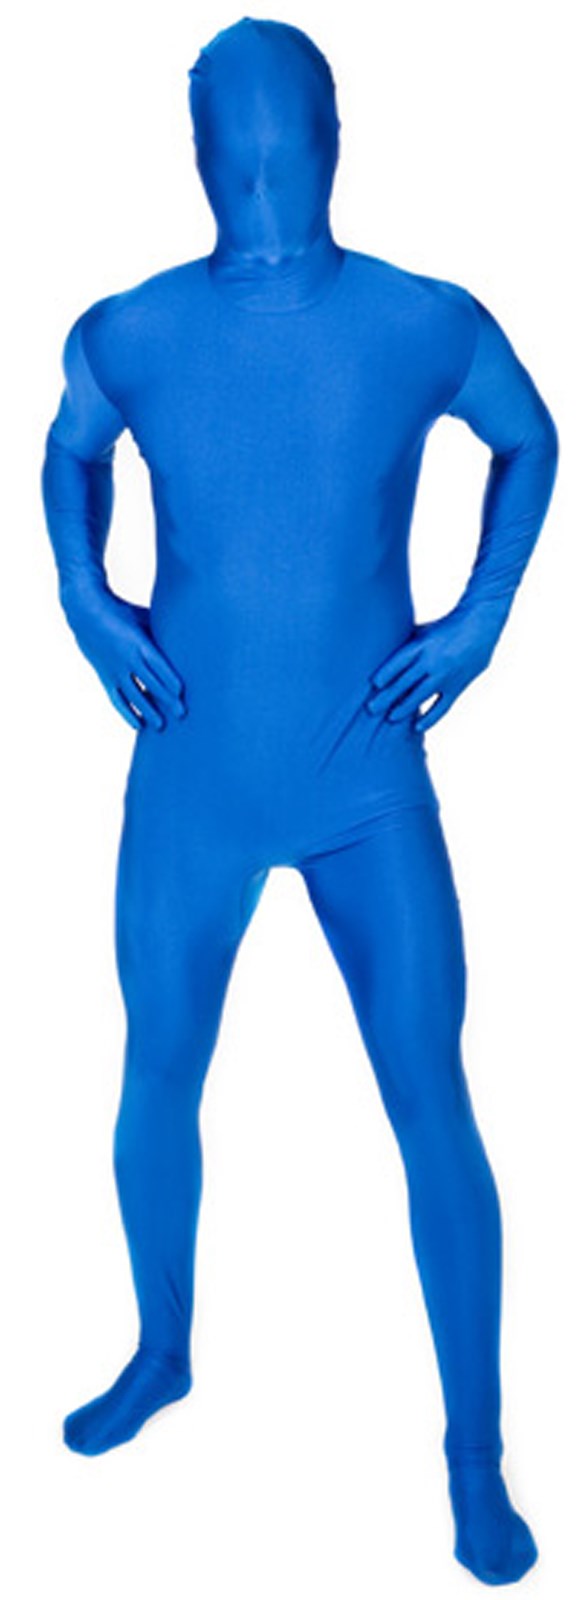 Blue Adult Morphsuit